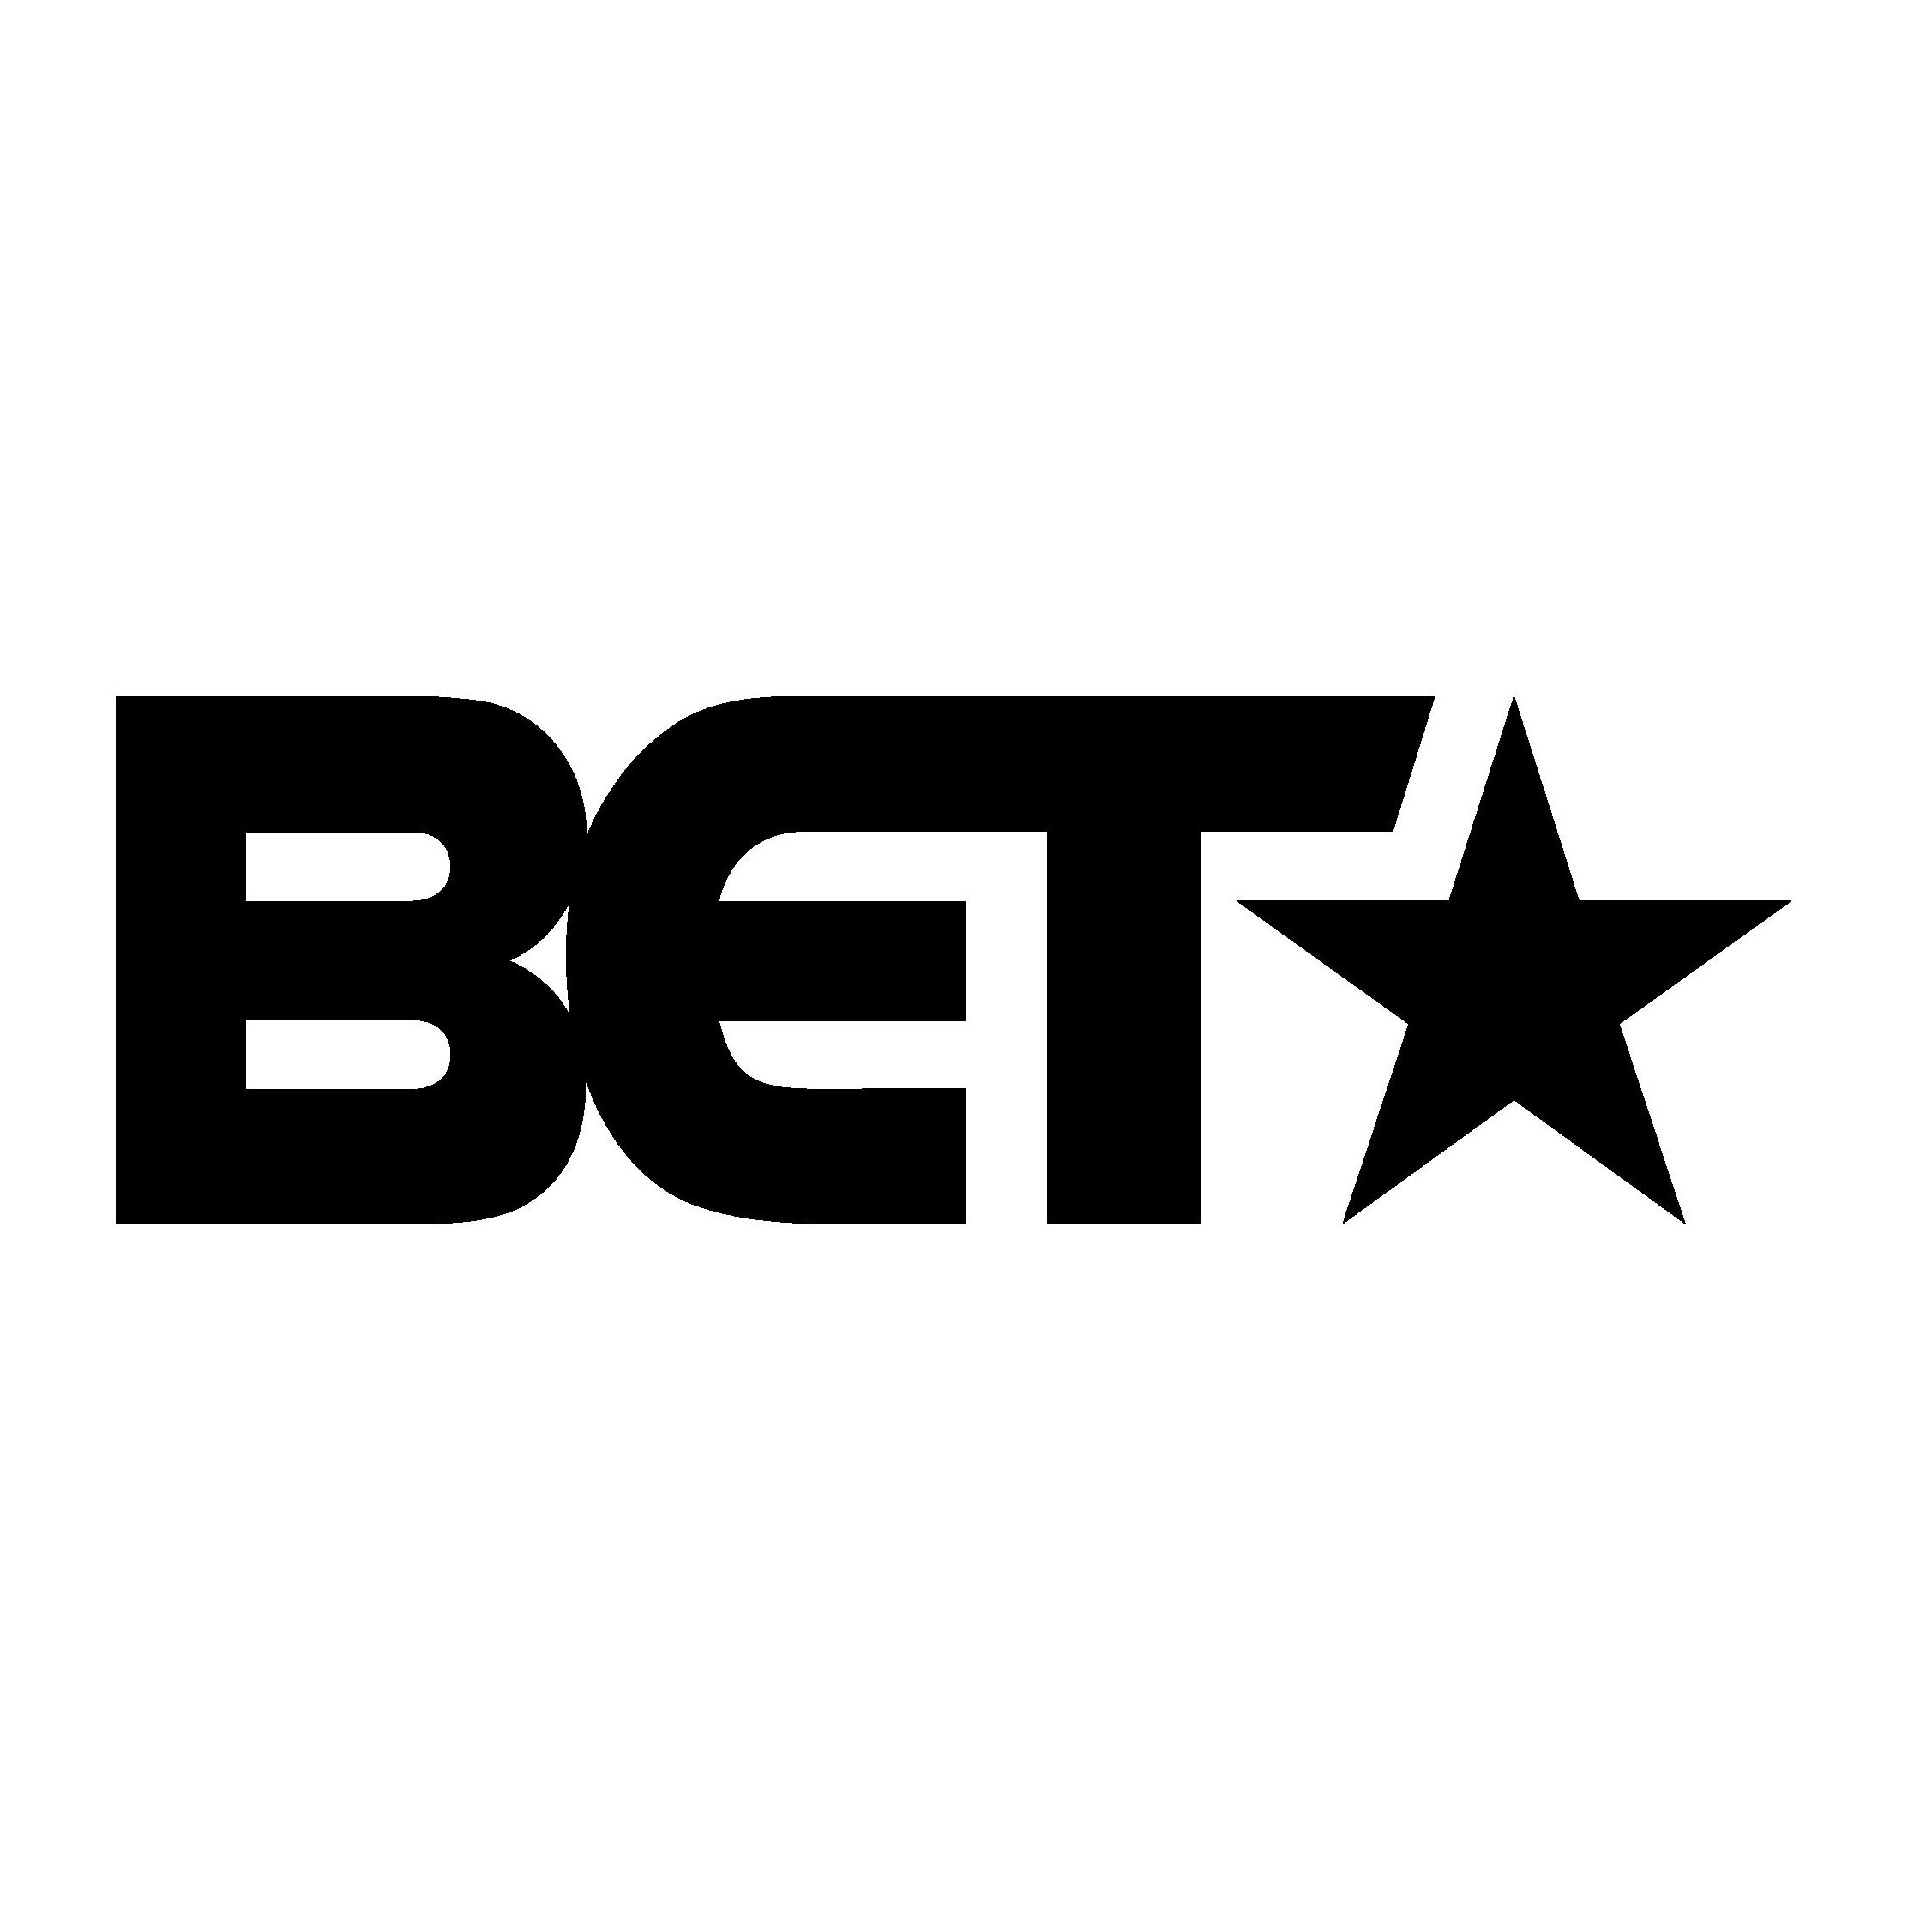 BET logo.jpg